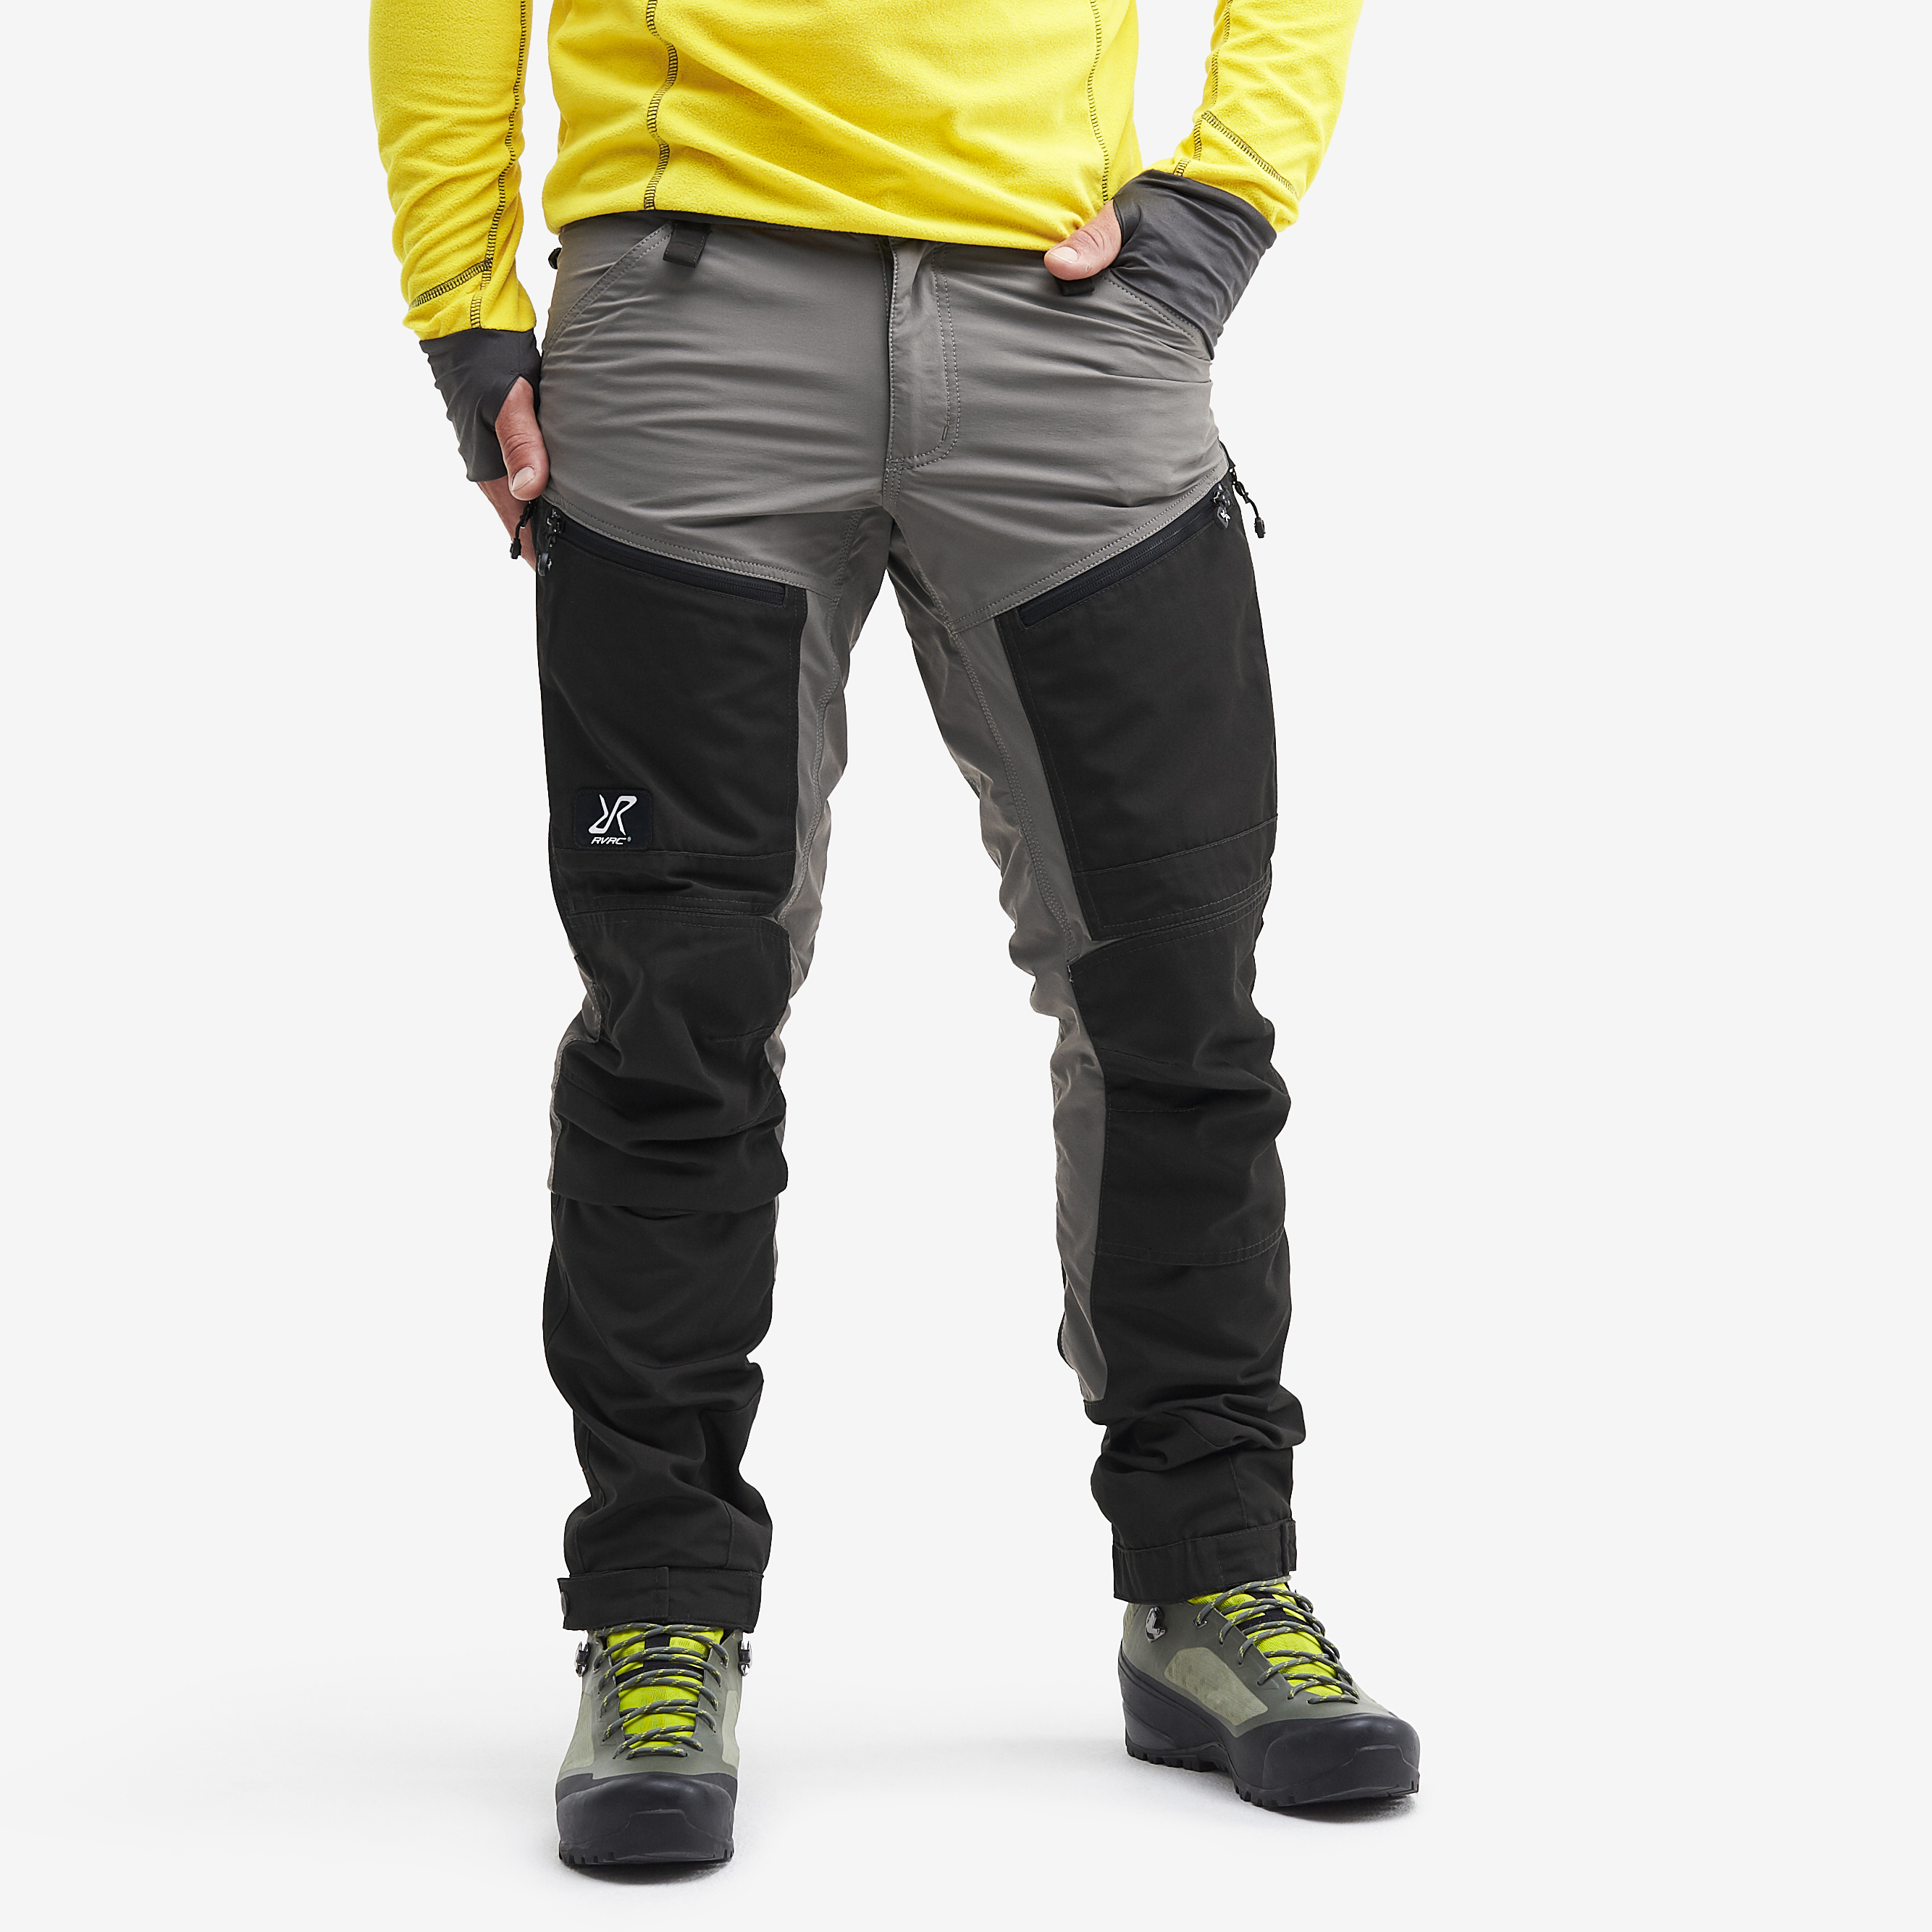 RVRC GP Pro hiking pants for men in light grey